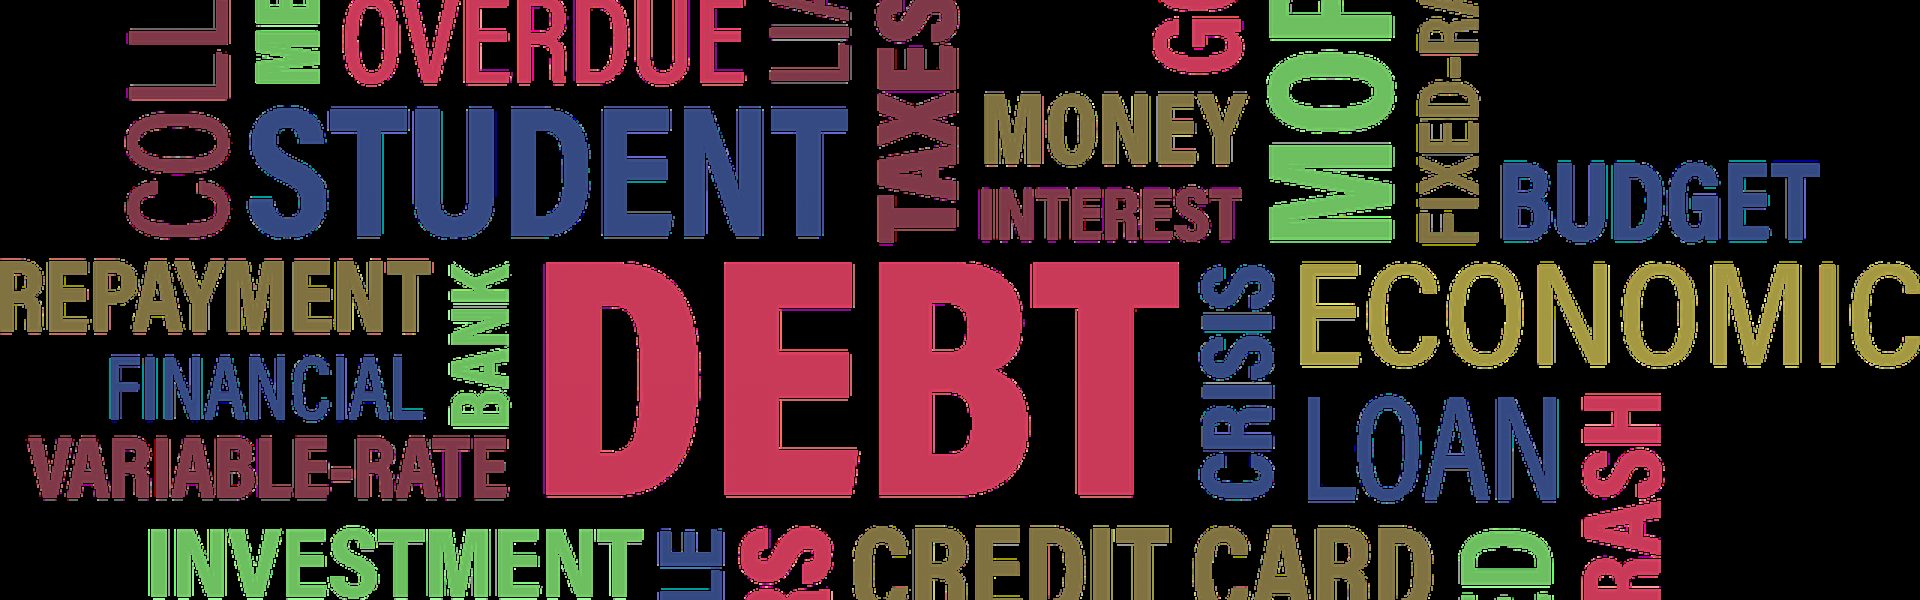 debt, loan, student